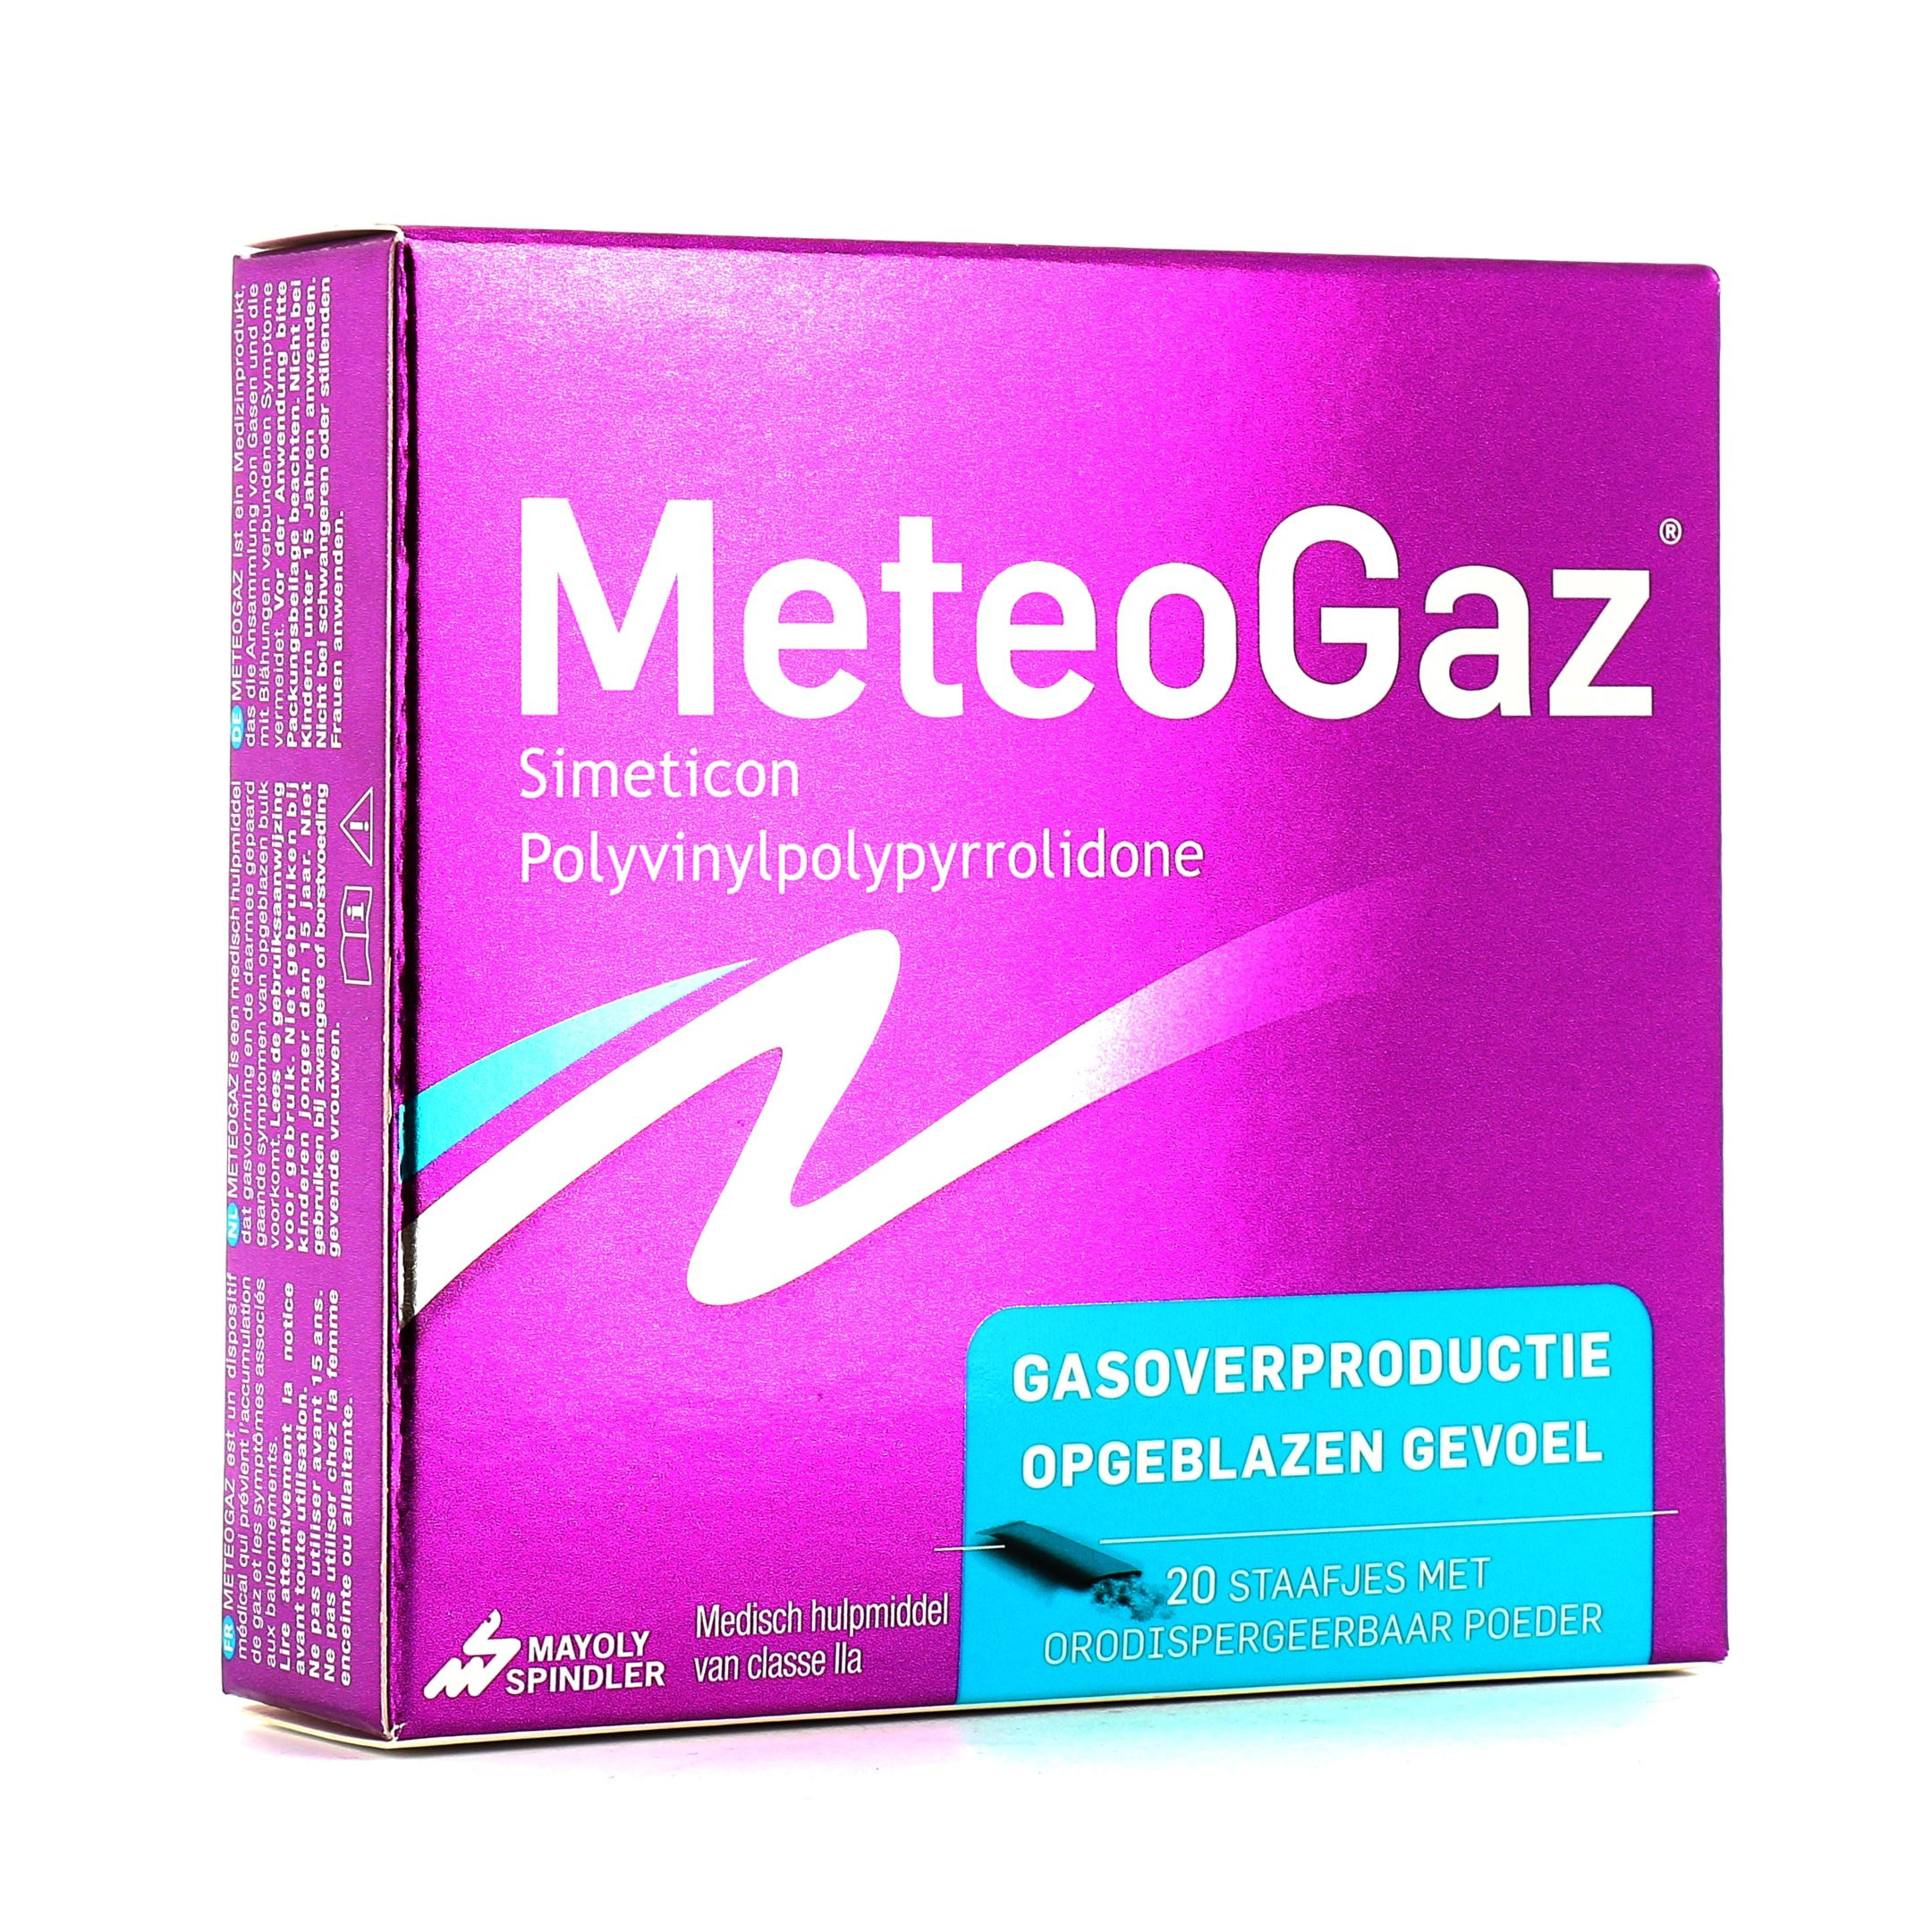 MeteoGaz Simeticone Polyplasdone sticks poudre orodispersible